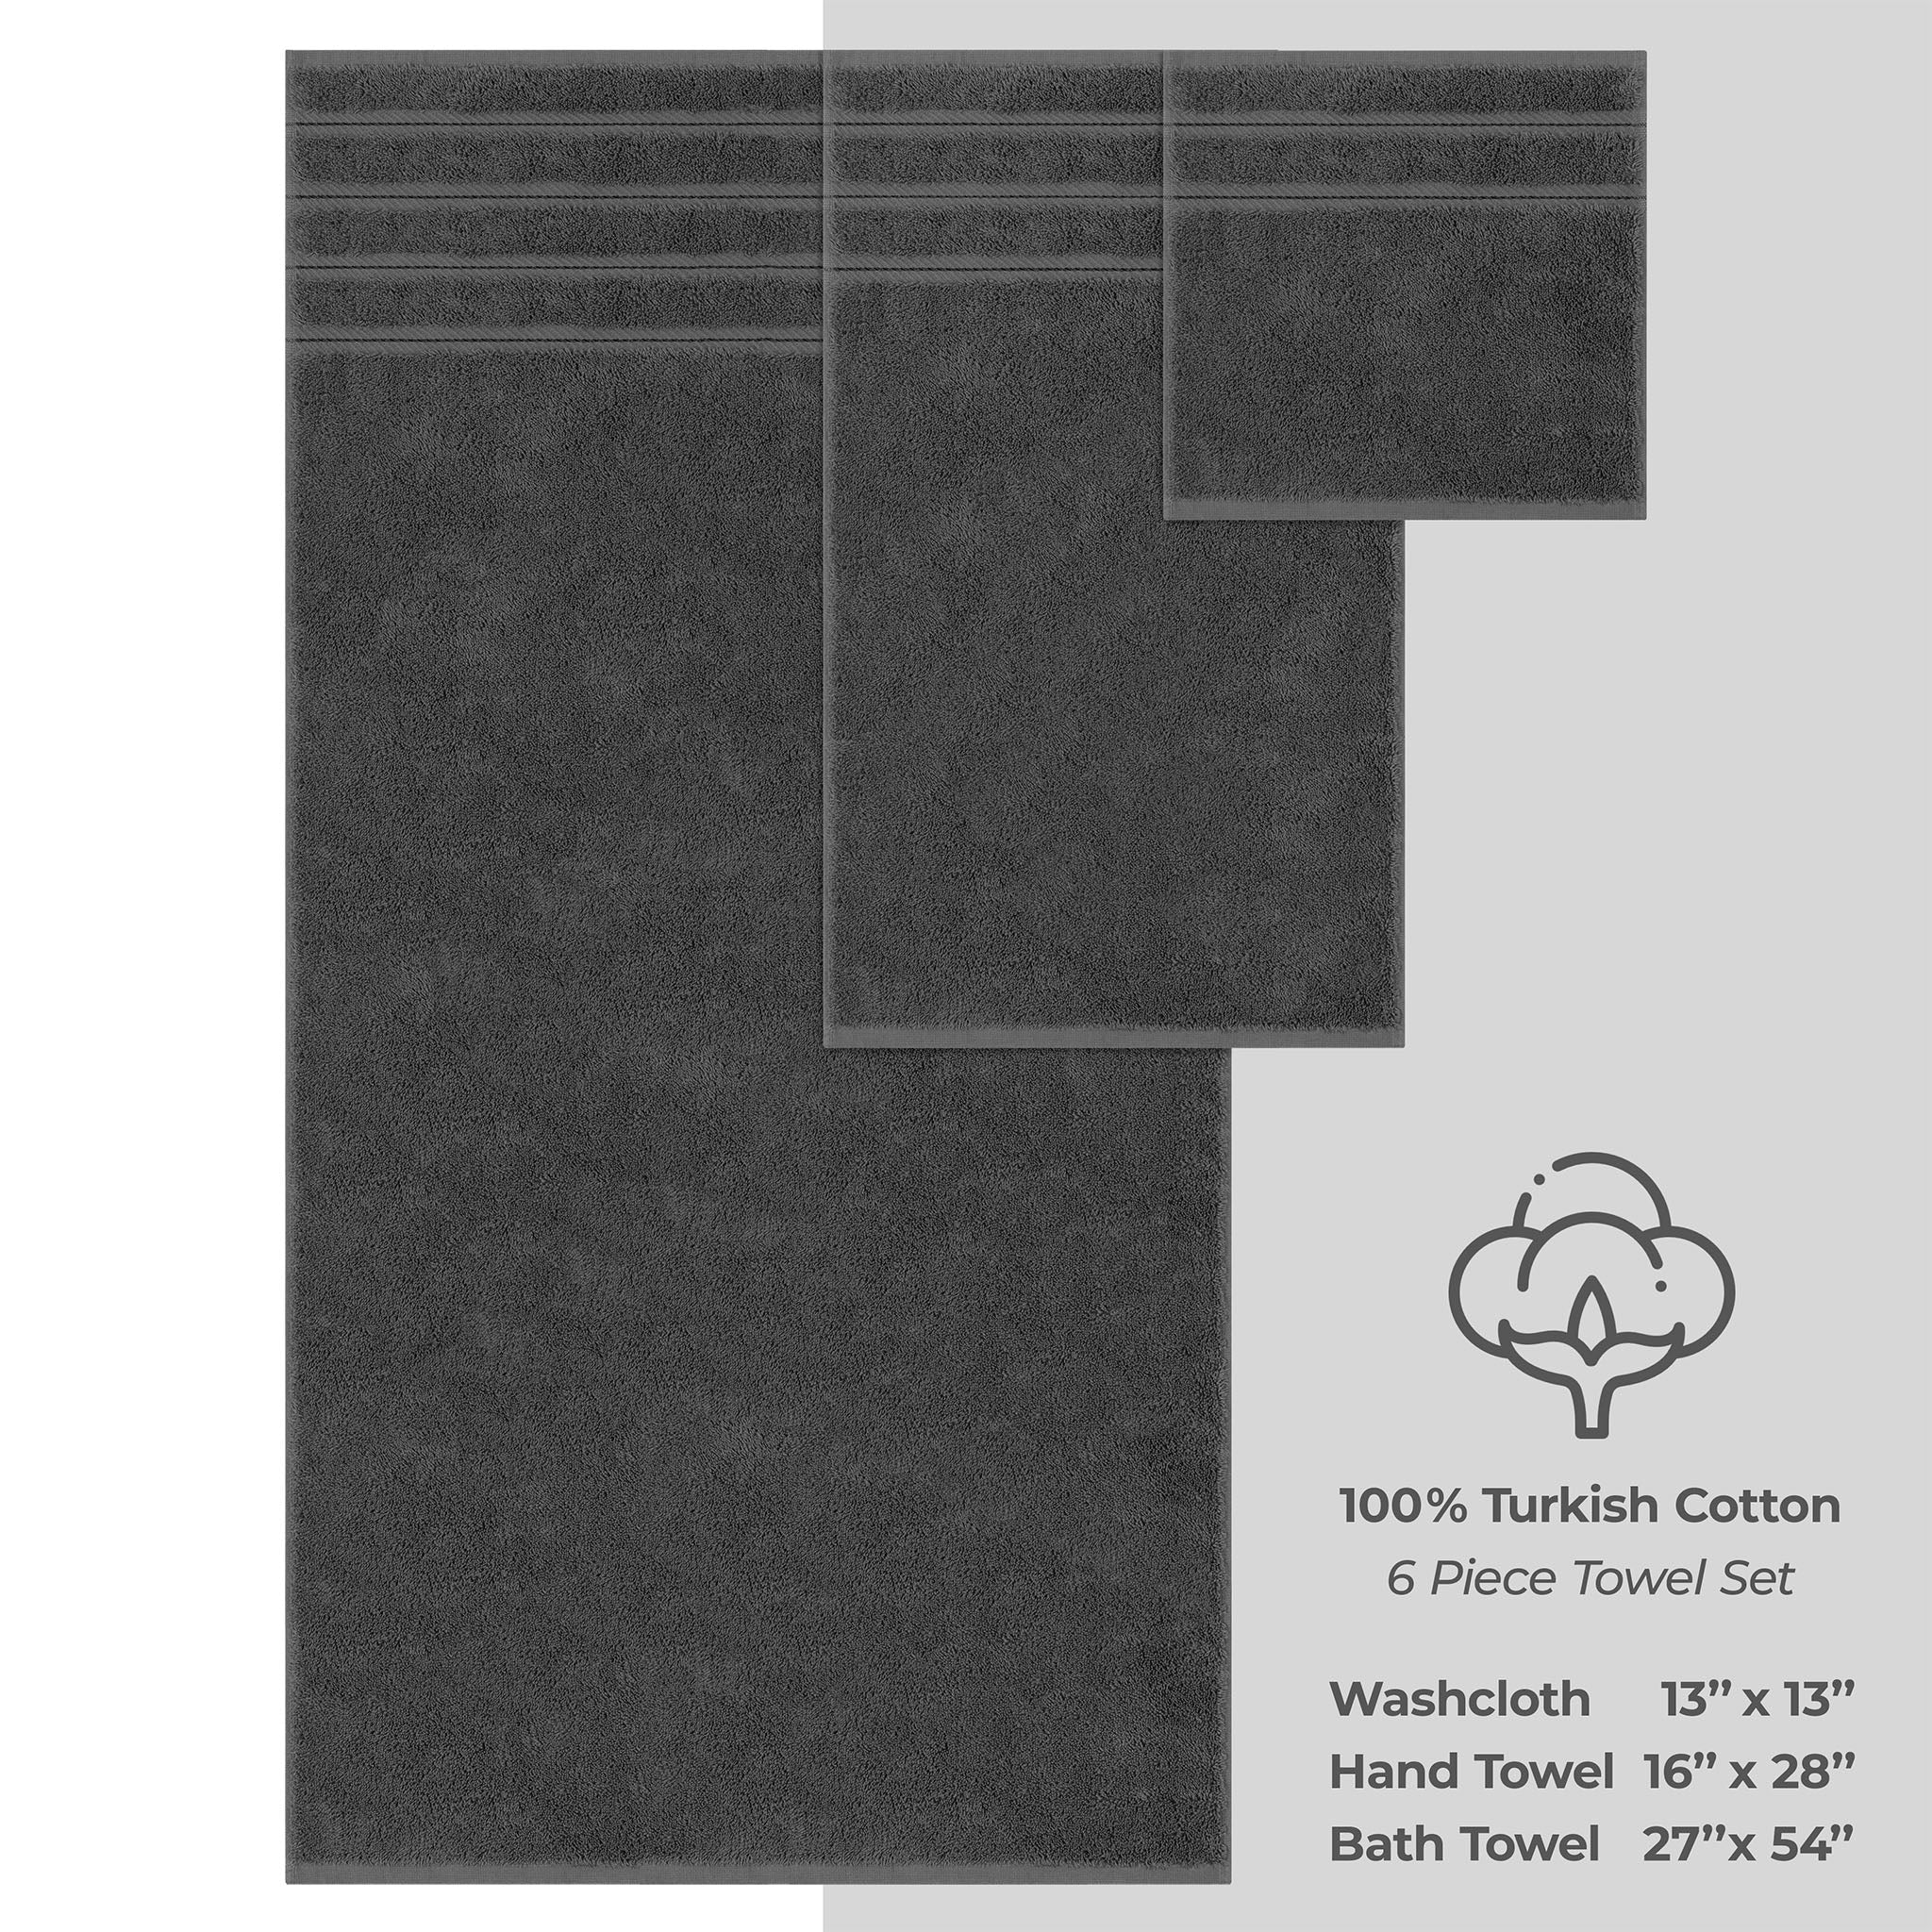 American Soft Linen 100% Turkish Cotton 6 Piece Towel Set Wholesale gray-4